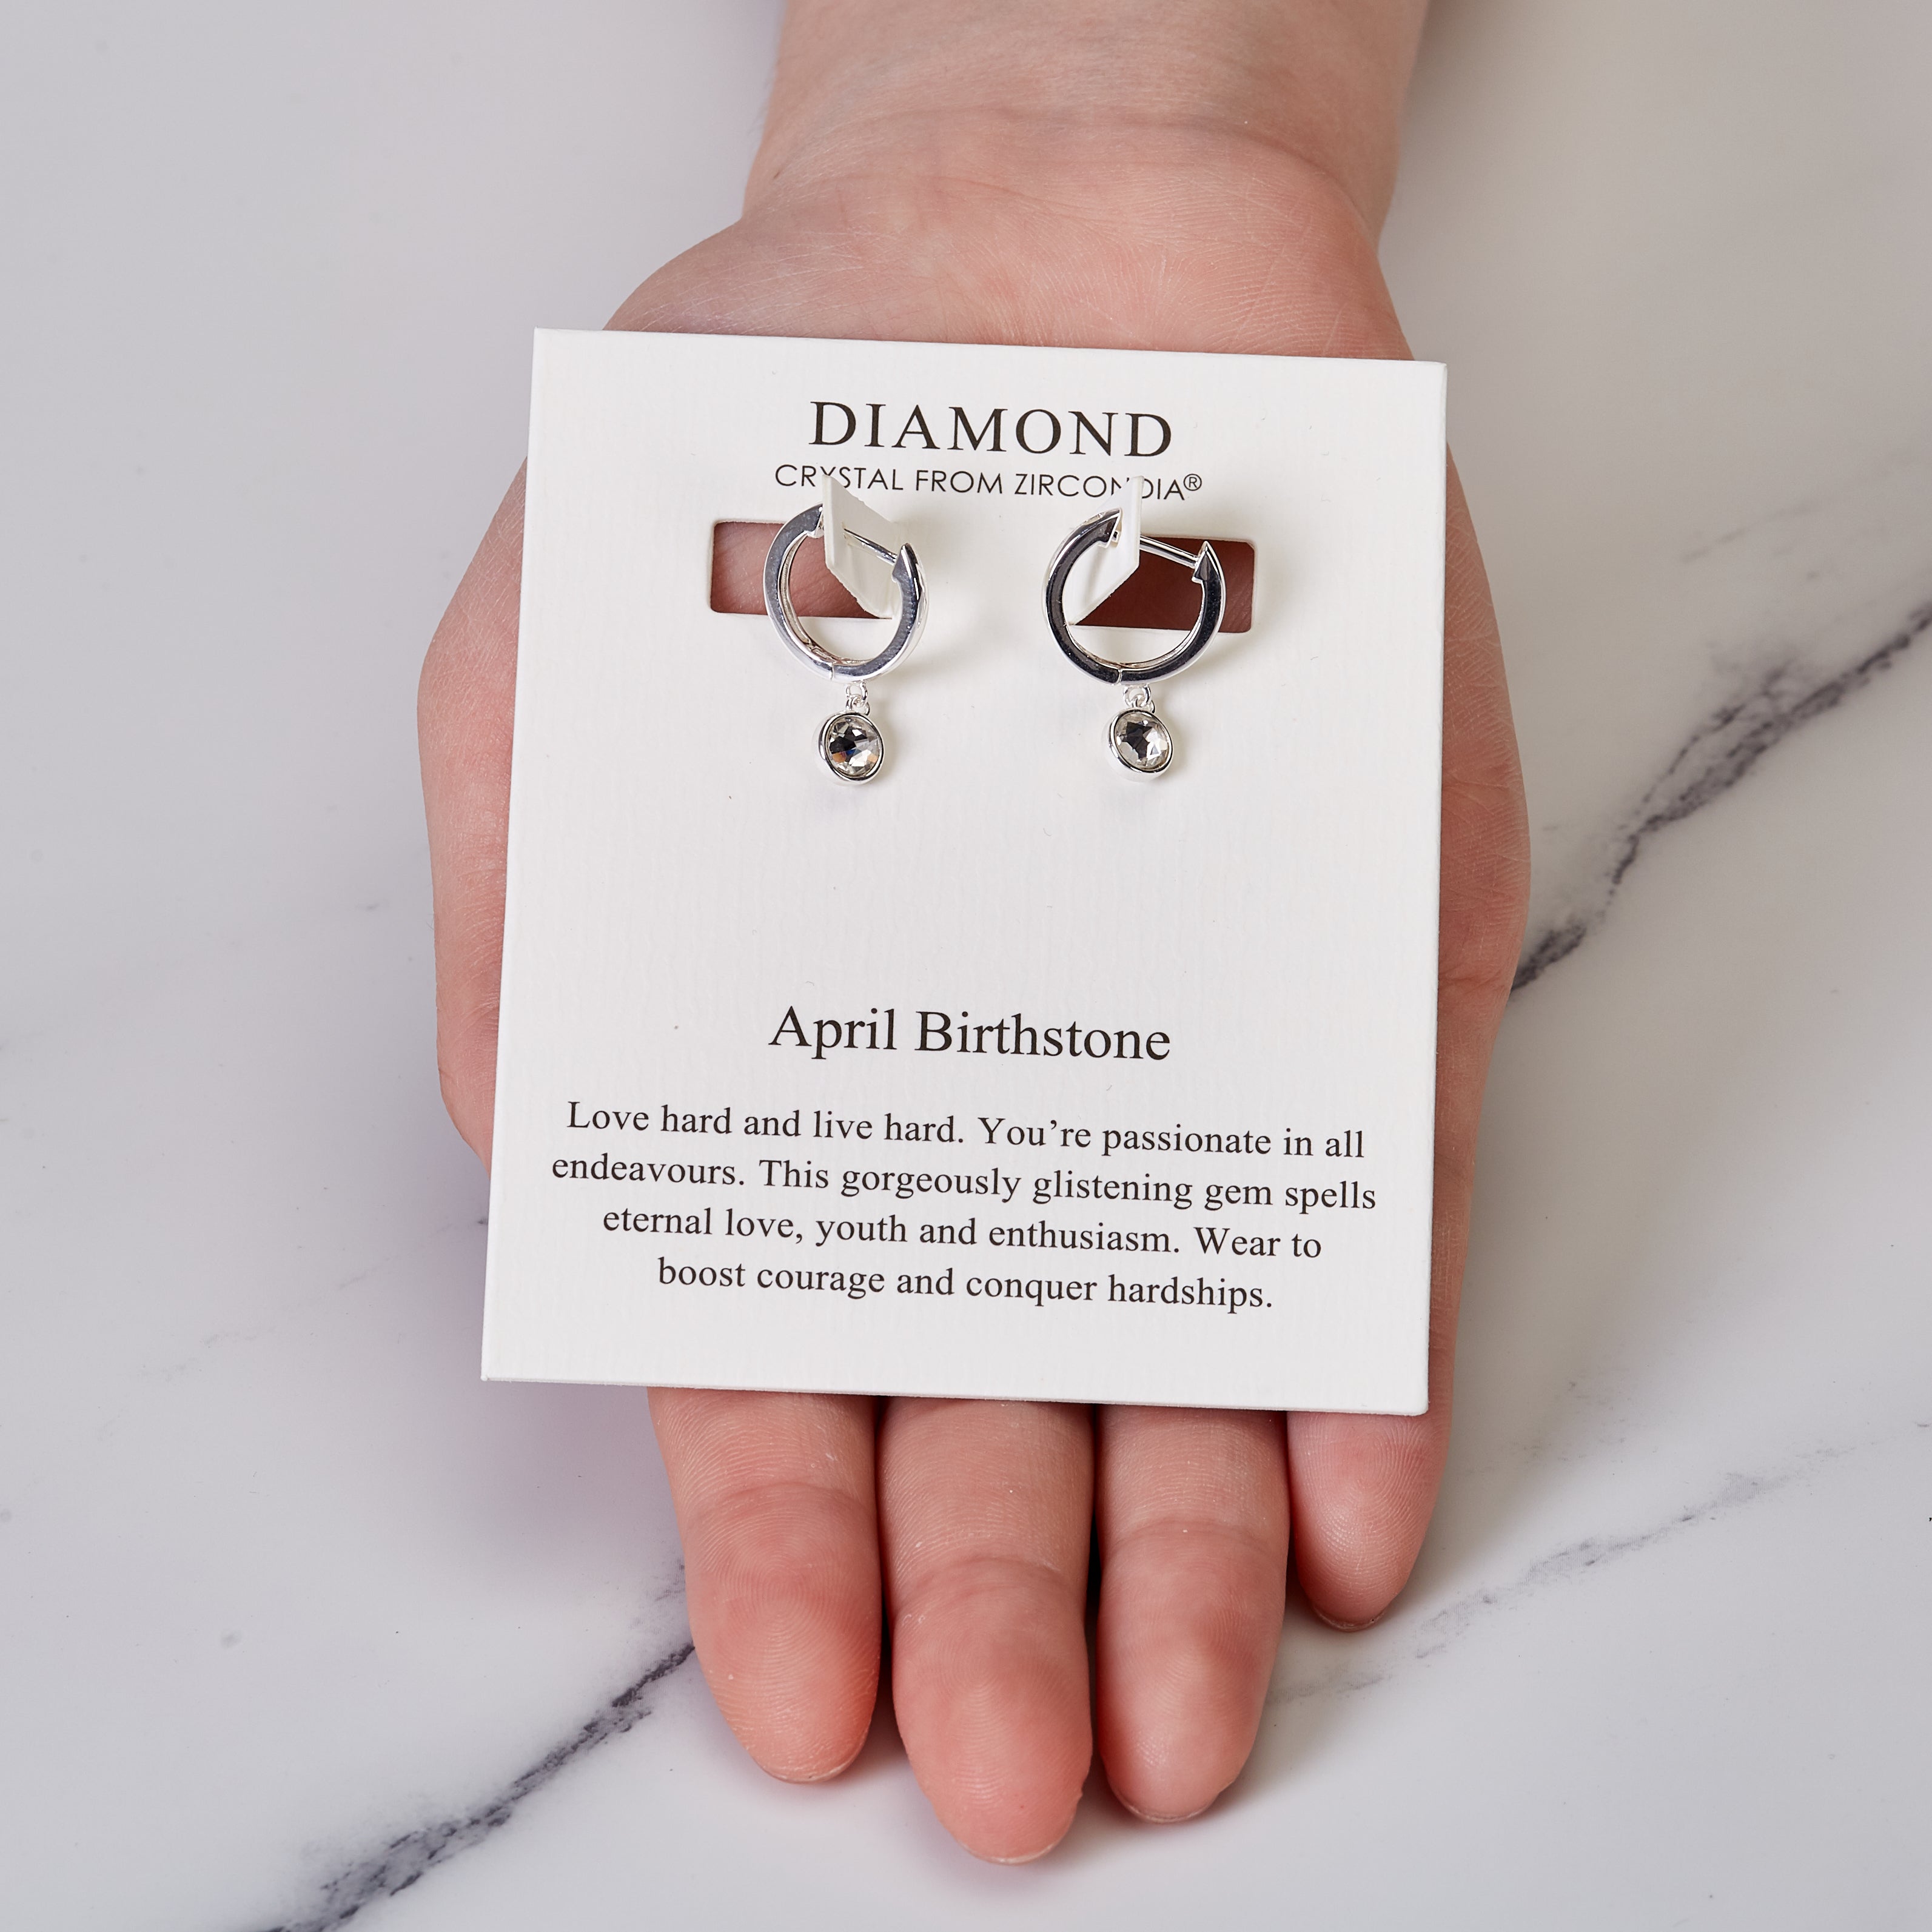 April Birthstone Hoop Earrings Created with Diamond Zircondia® Crystals